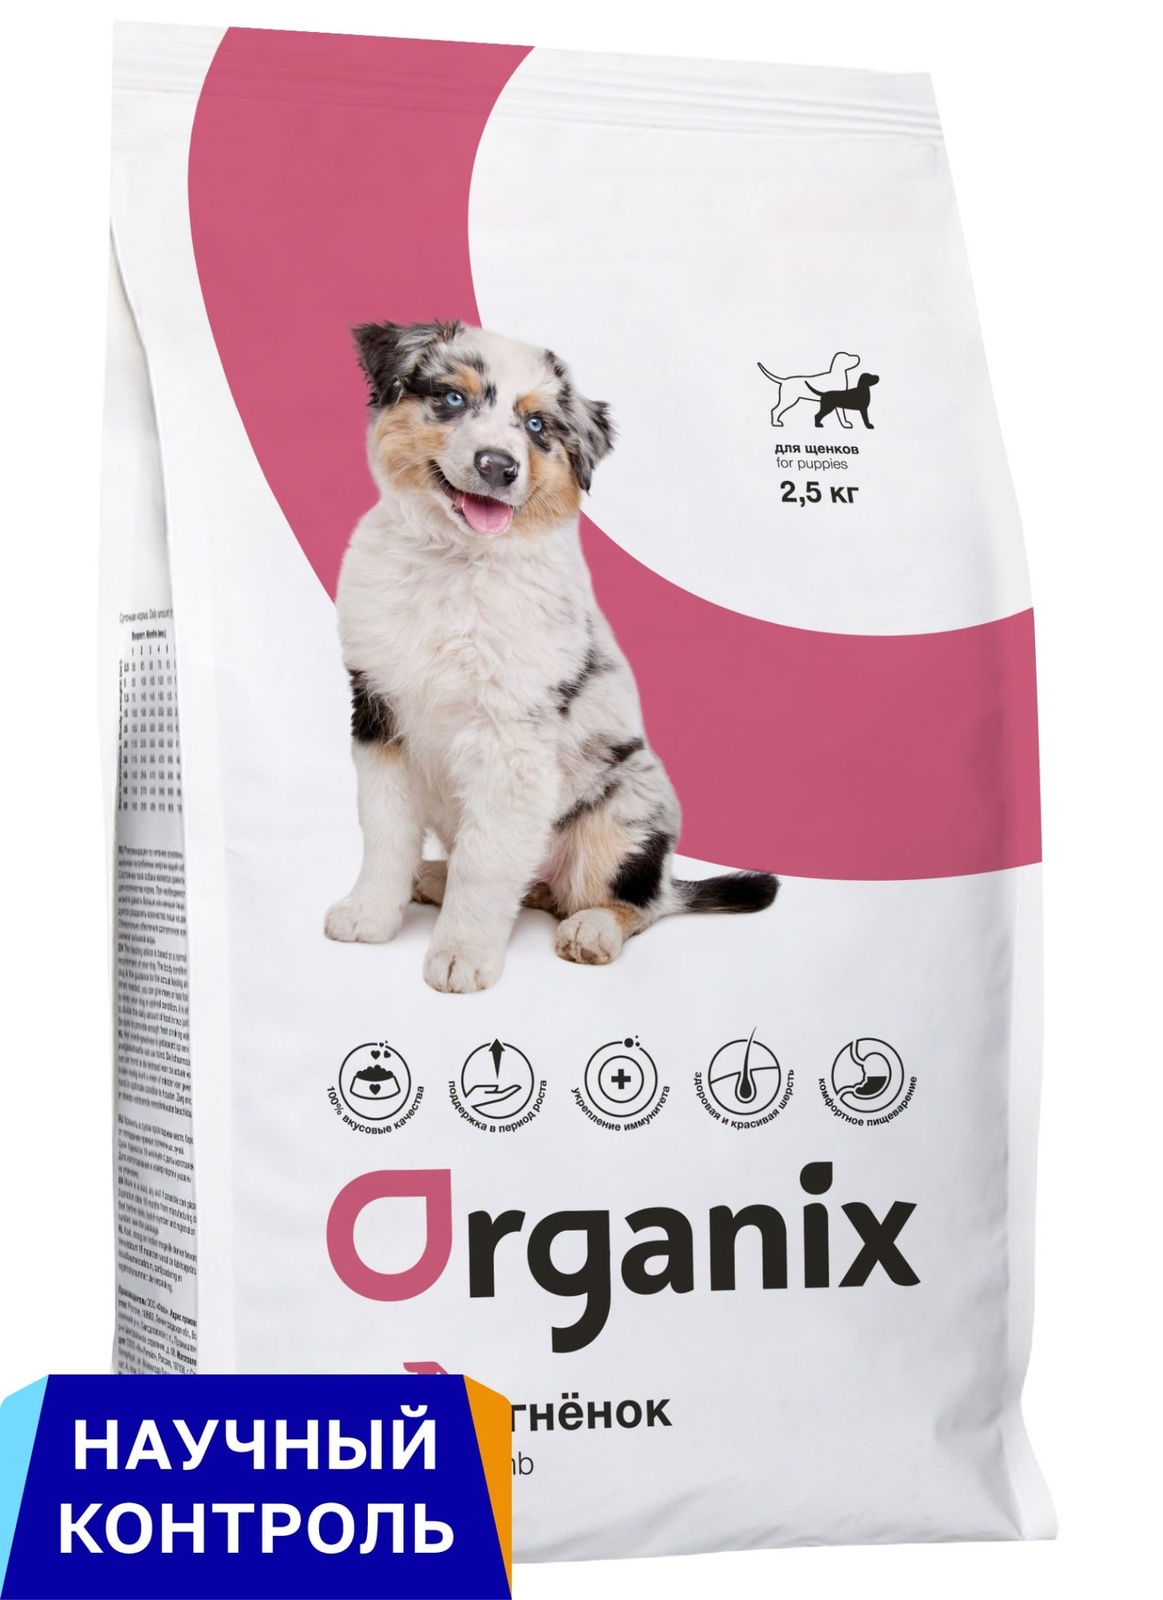 Organix Organix сухой корм для щенков, с ягненком (18 кг)